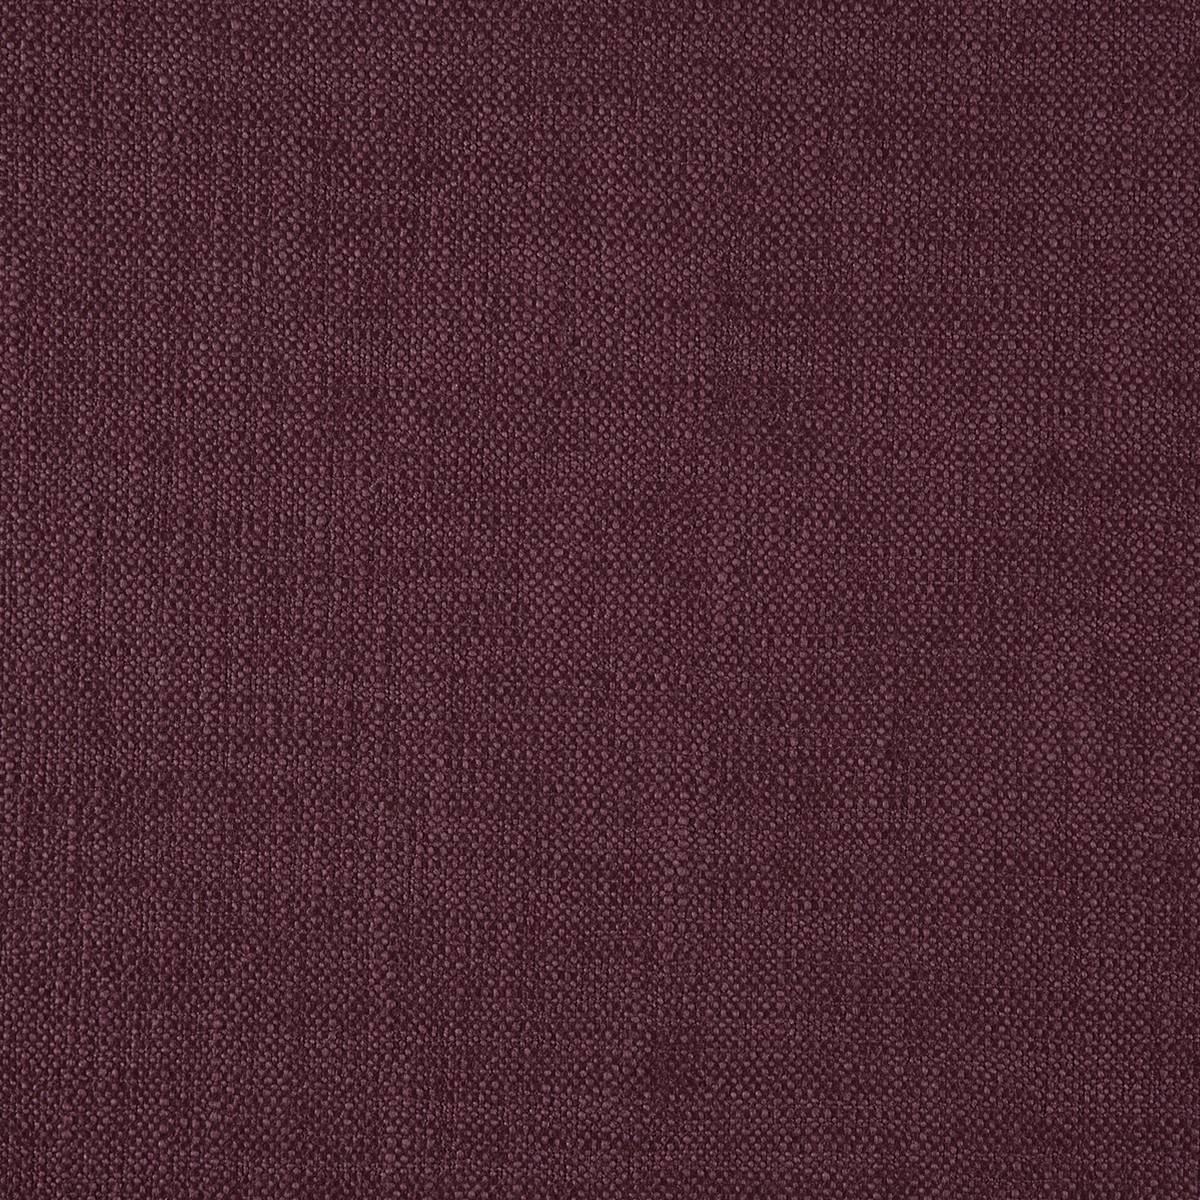 Rustic Dubarry Fabric by Prestigious Textiles